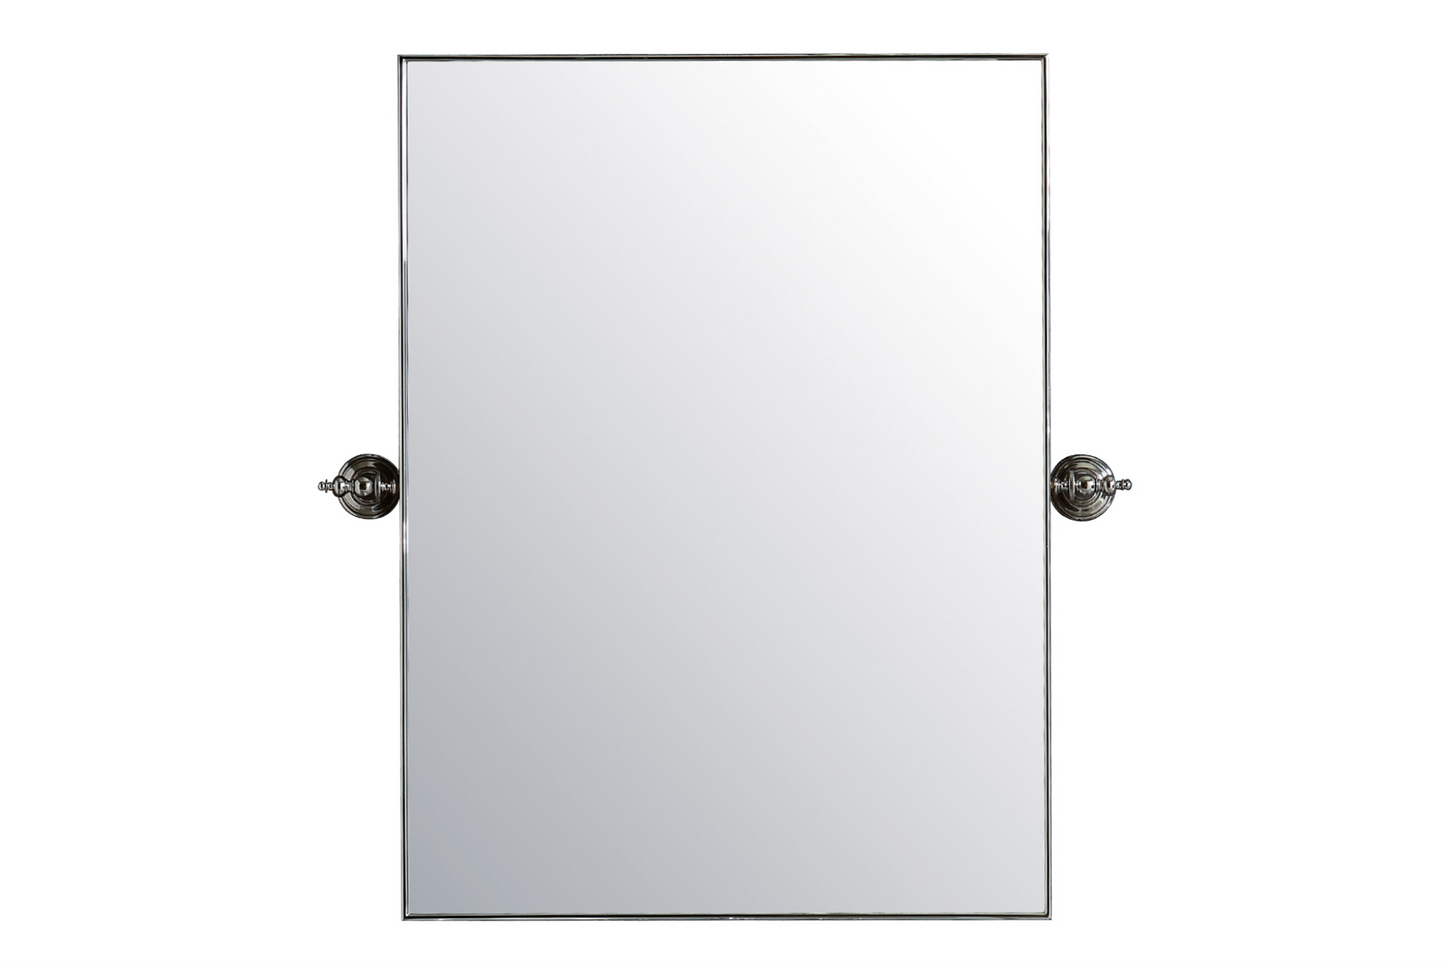 Tilting rectangular bathroom mirror with Classic style frame